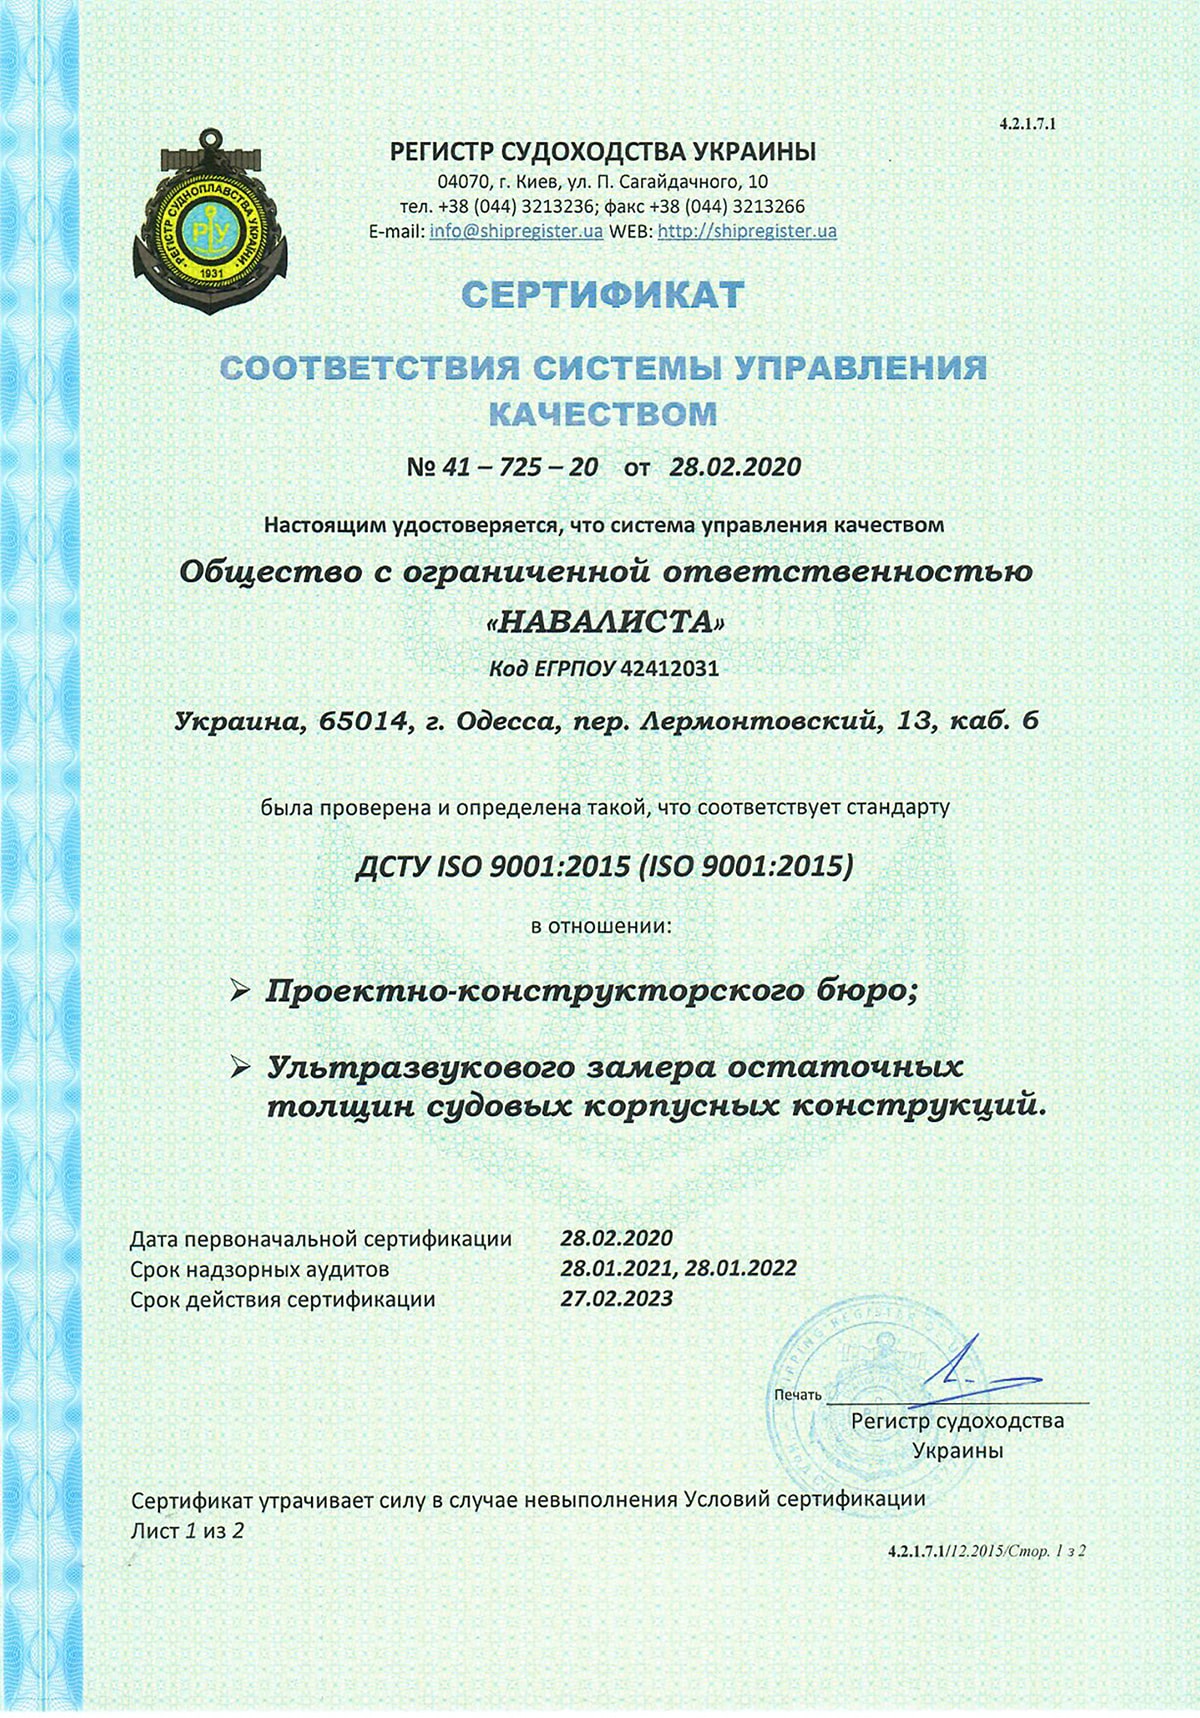 ukrsepro certificate of conformity